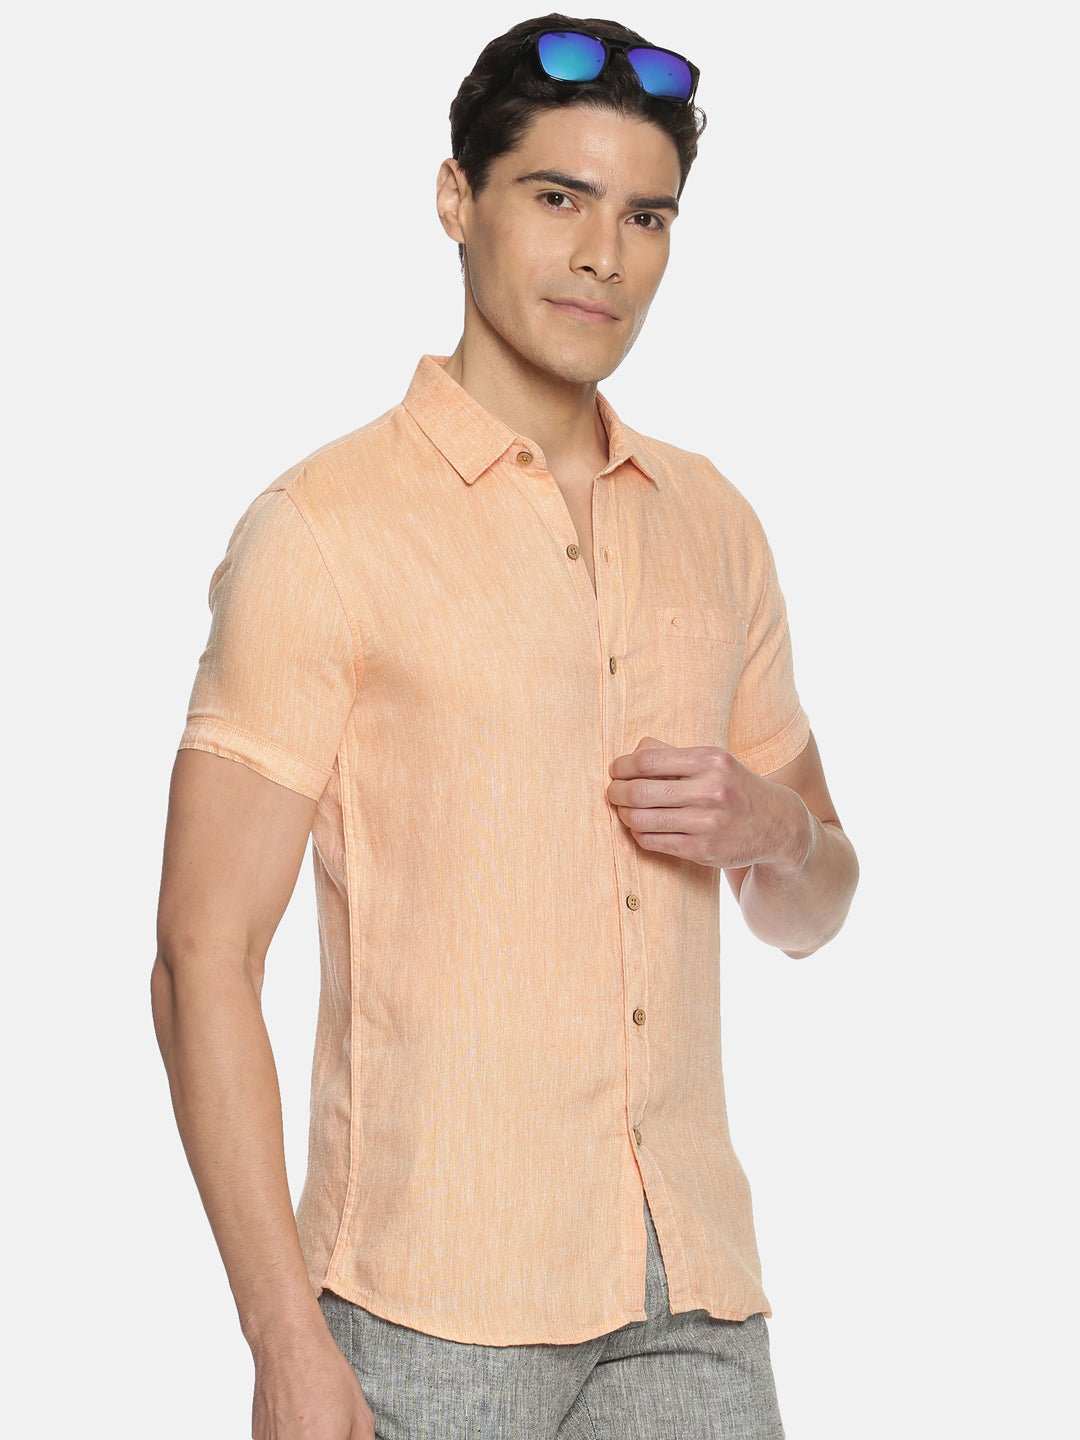 Ecentric Neon Saffron Colour Slim Fit Hemp Casual Shirt - CBD Store India